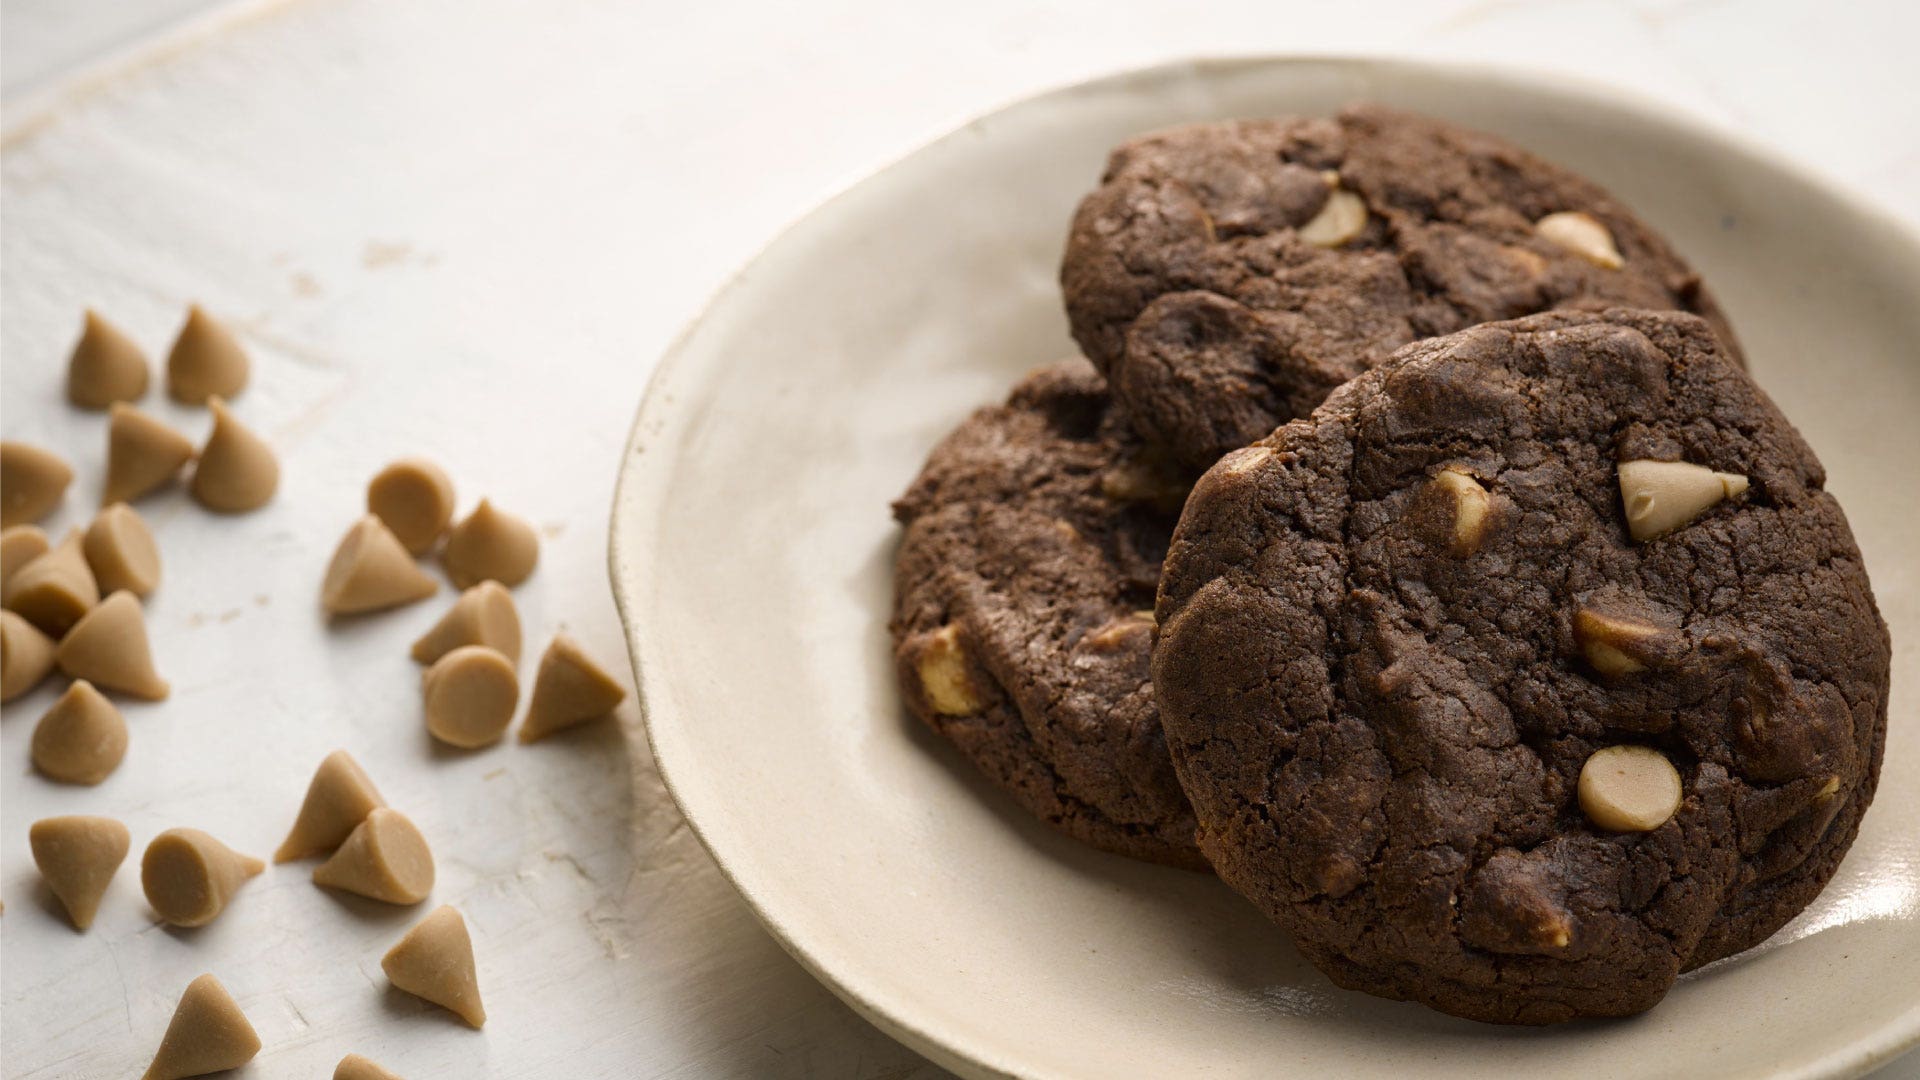 https://www.hersheyland.com/content/dam/hersheyland/en-us/recipes/recipe-images/67-sea-salt-caramel-chip-chocolate-cookies.jpg